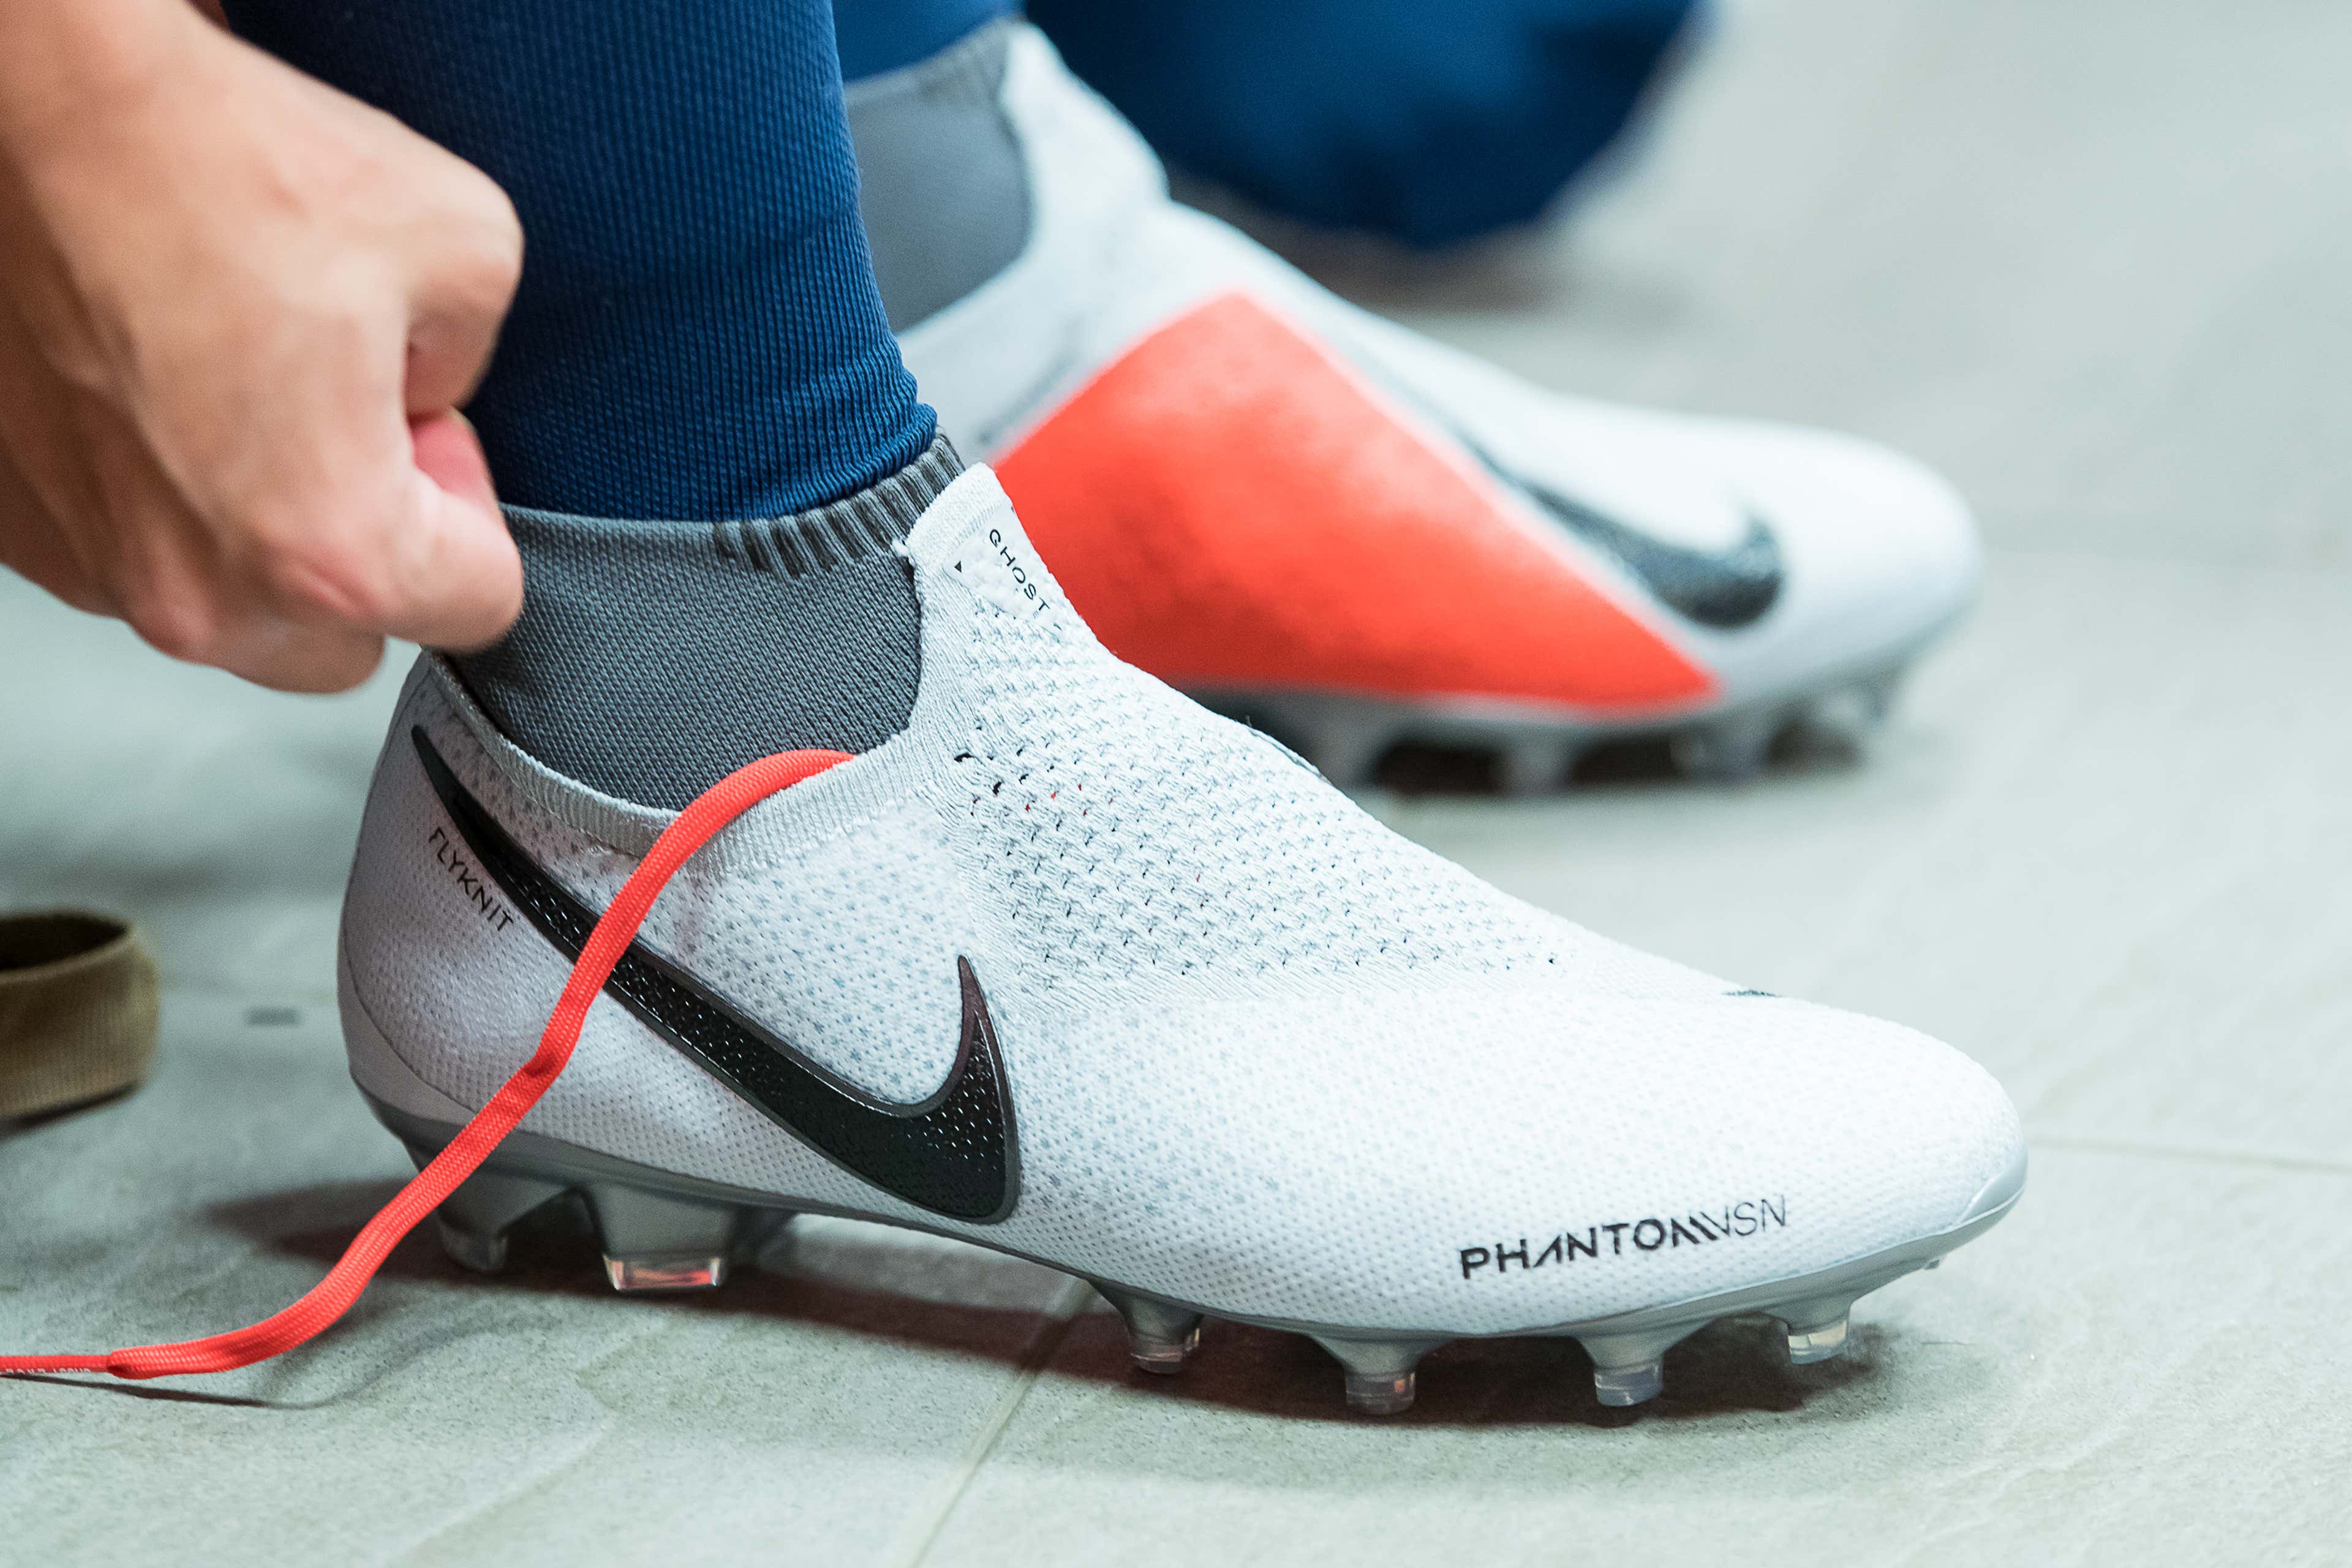 Nike's PhantomVSN; a dream Paris Saint-Germain playmaker Marco Verratti | Goal.com